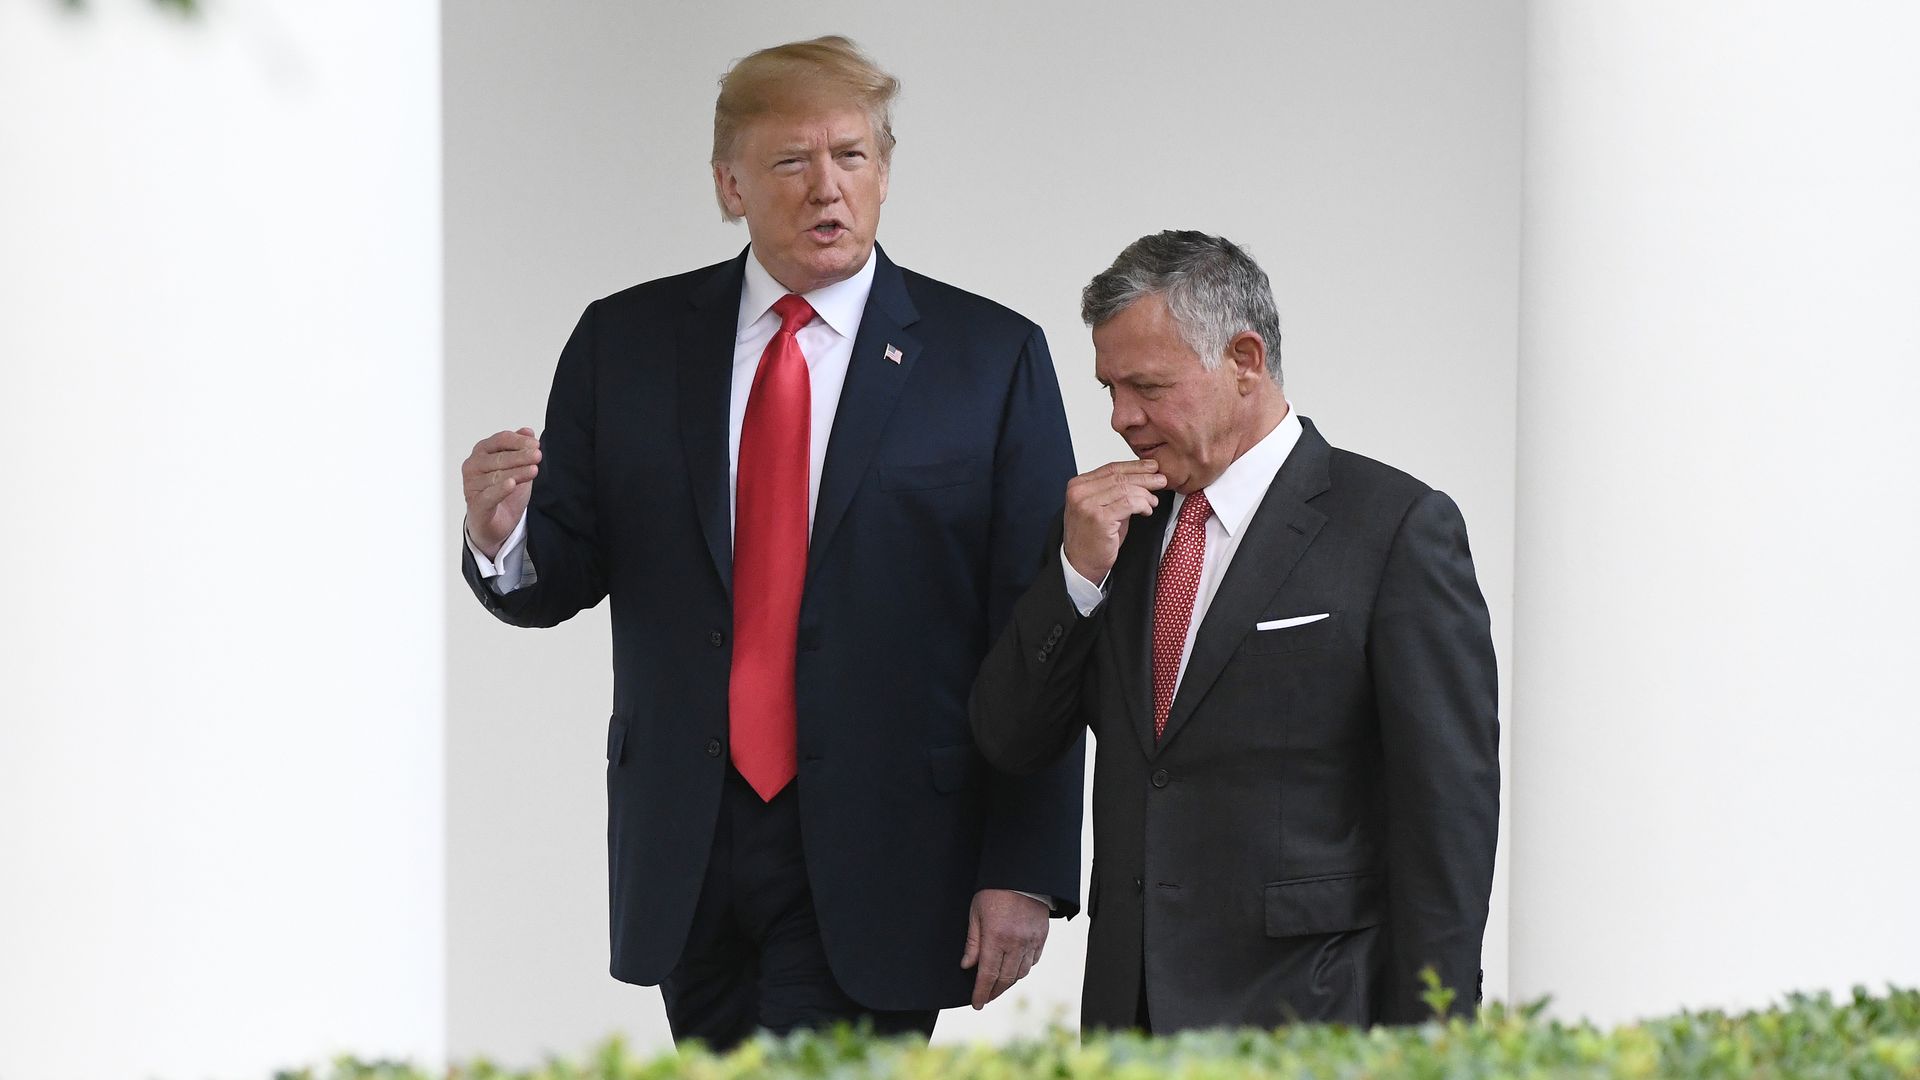 President Trump and King Abdullah of Jordan walking